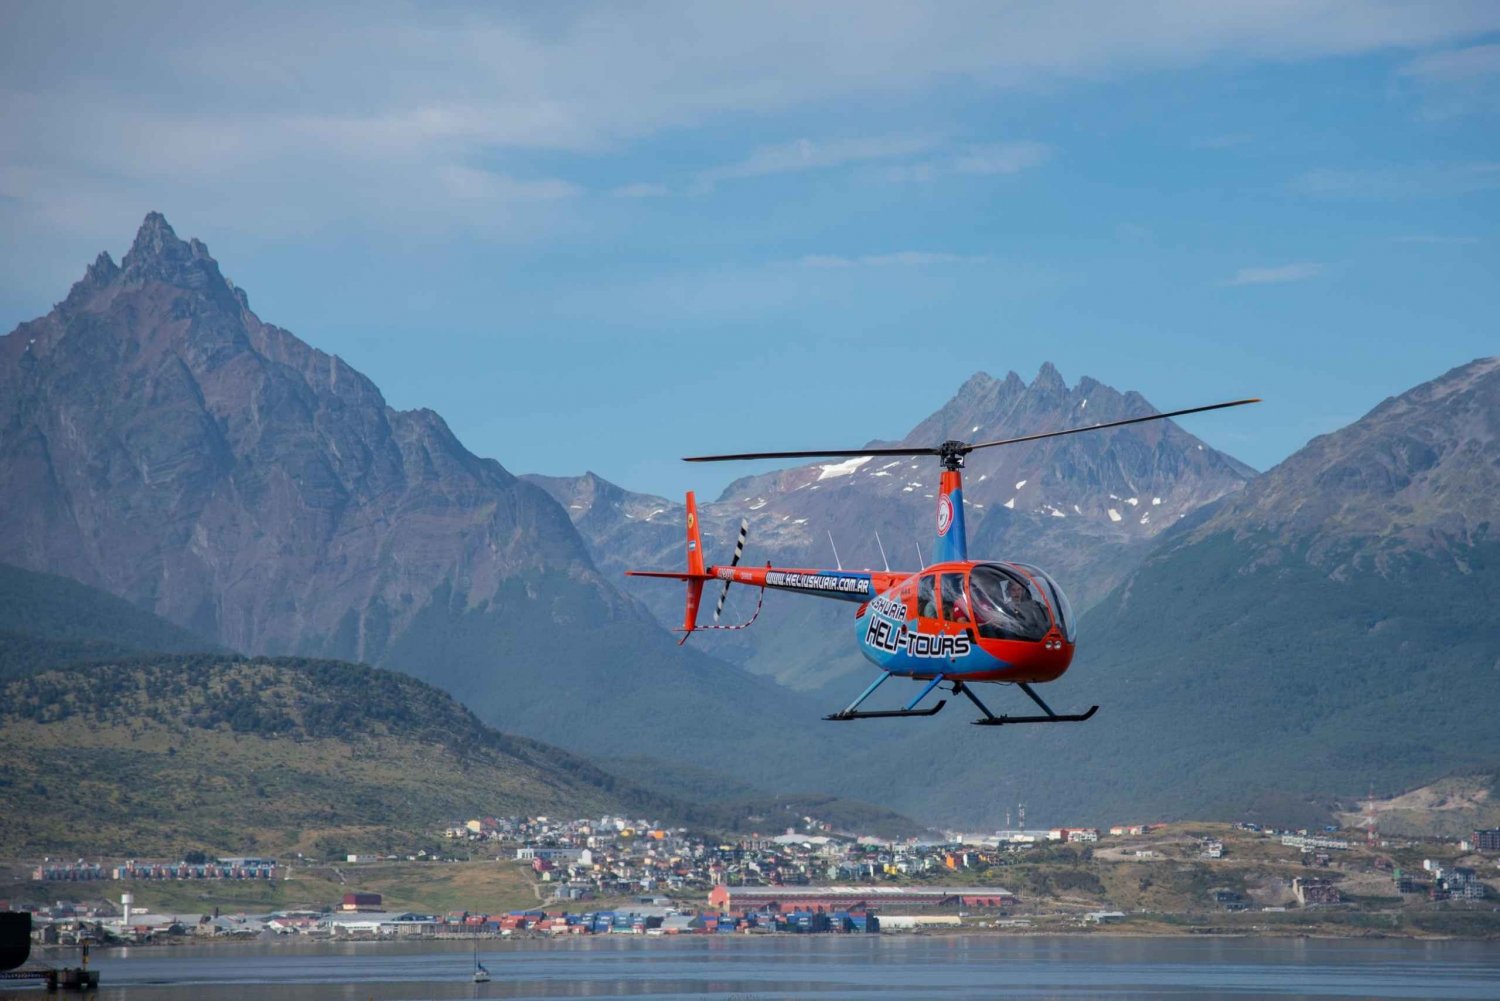 Ushuaia: Helicopter Scenic Flight